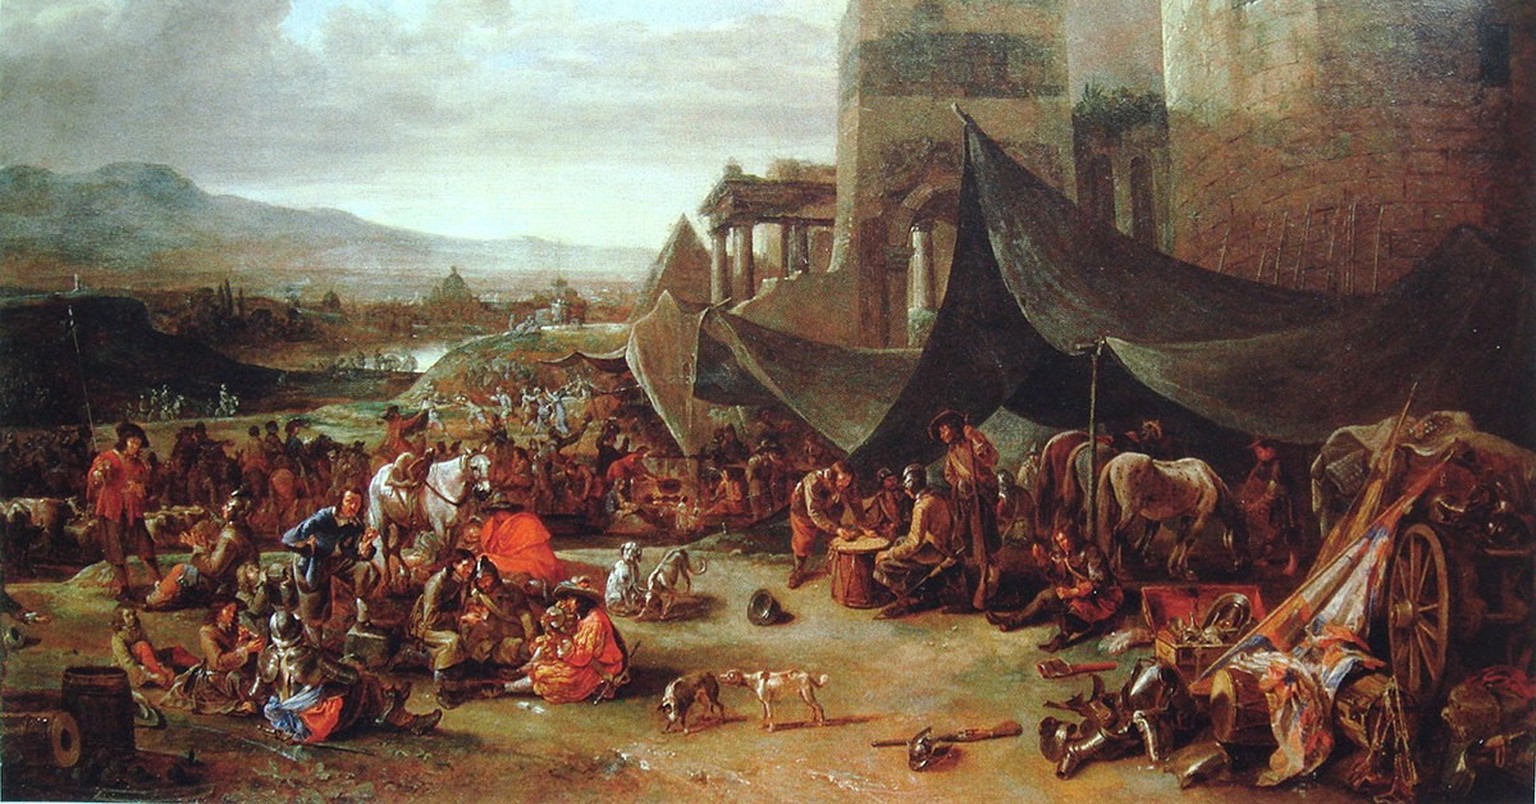 Der «Sacco di Roma», Gemälde von Johannes Lingelbach aus dem 17. Jahrhundert.
https://commons.wikimedia.org/wiki/File:Sack_of_Rome_of_1527_by_Johannes_Lingelbach_17th_century.jpg